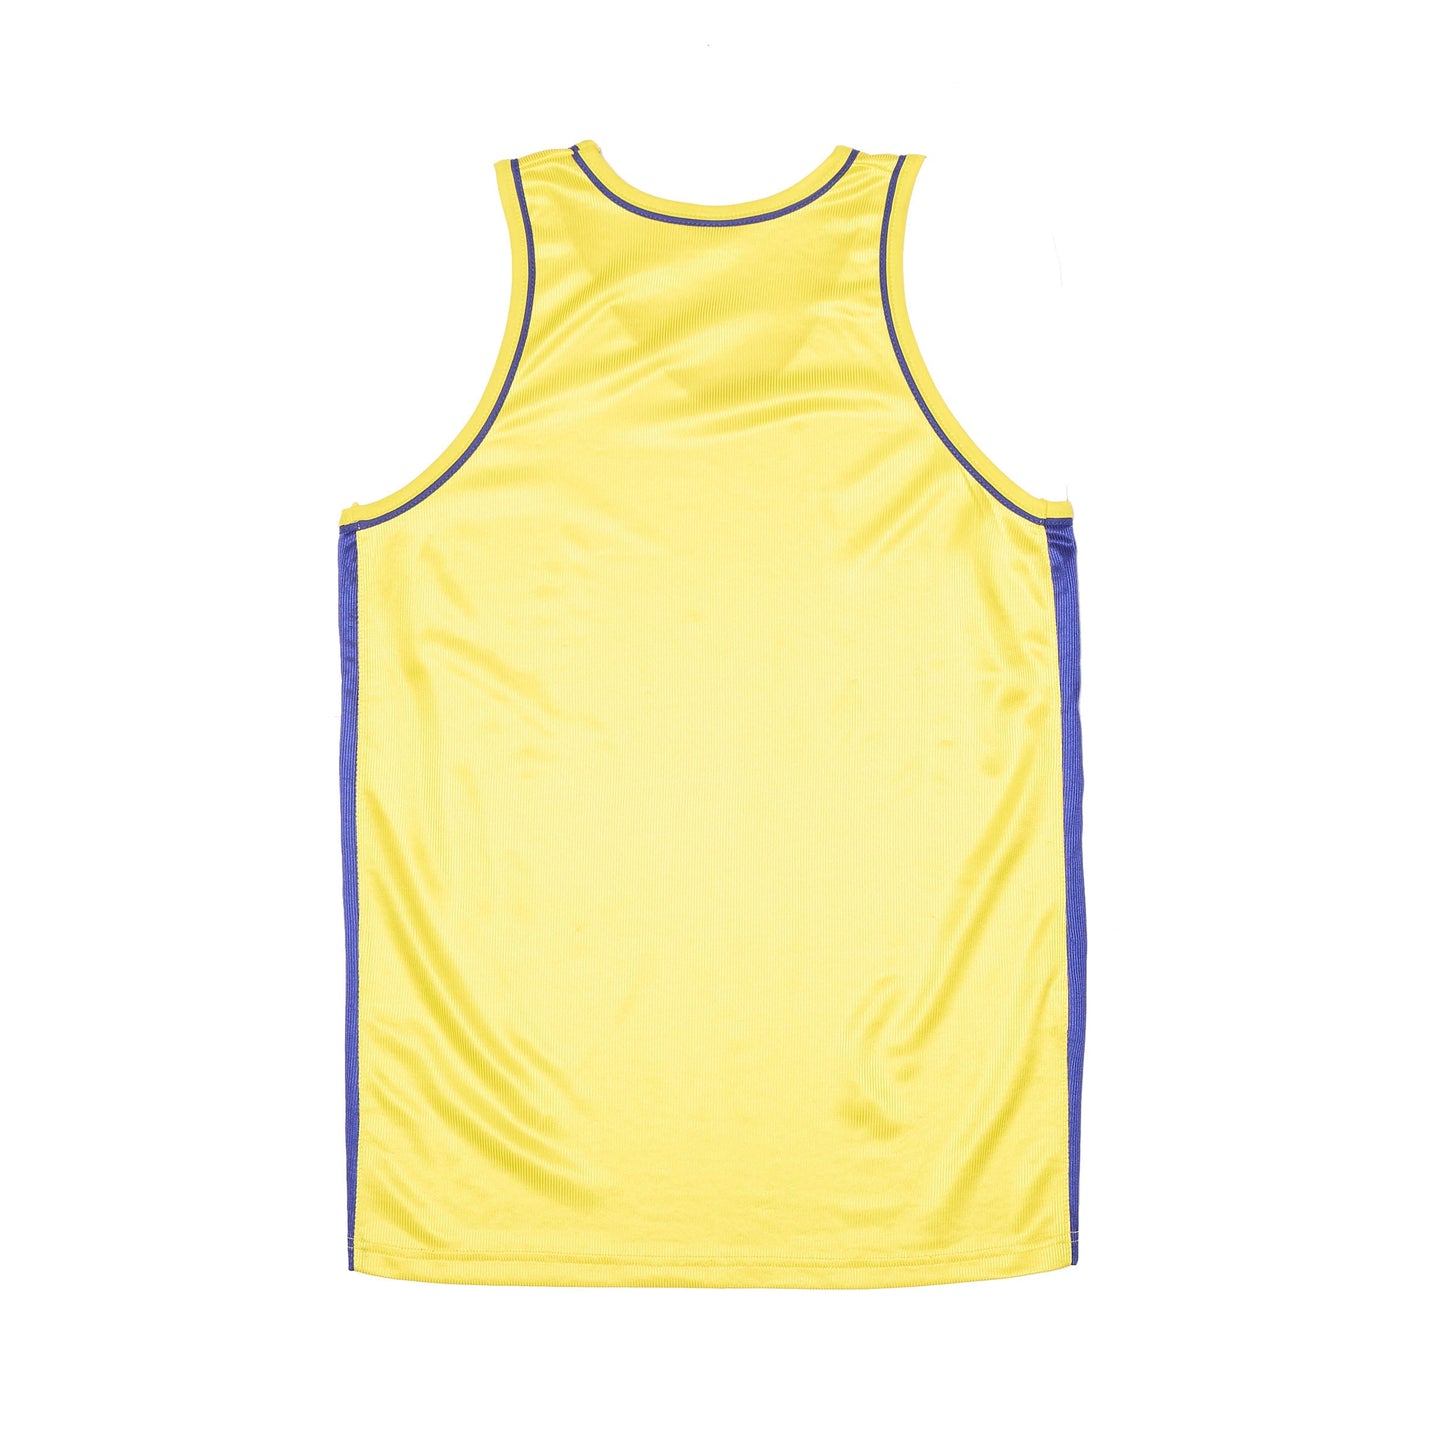 Replica NBA   Sleeveless Sports Shirt - L